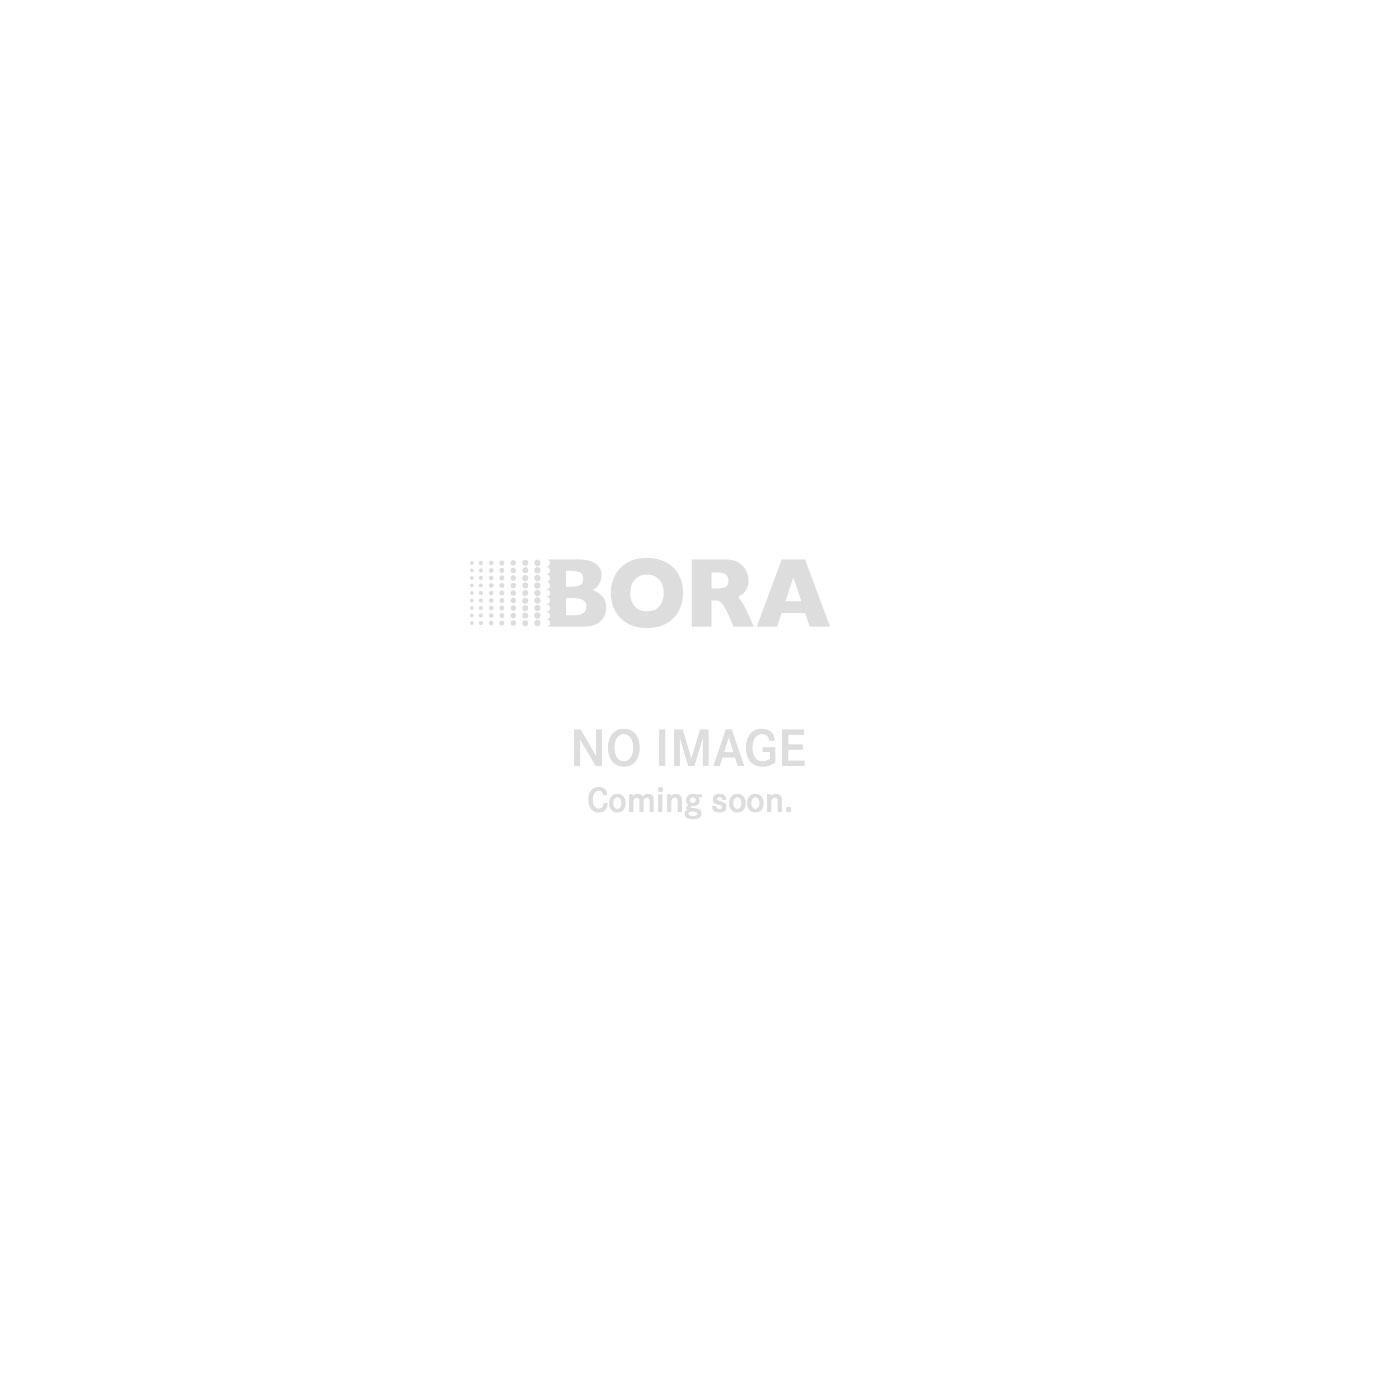 New award for BORA Basic: Interior Innovation Award - winner 2015